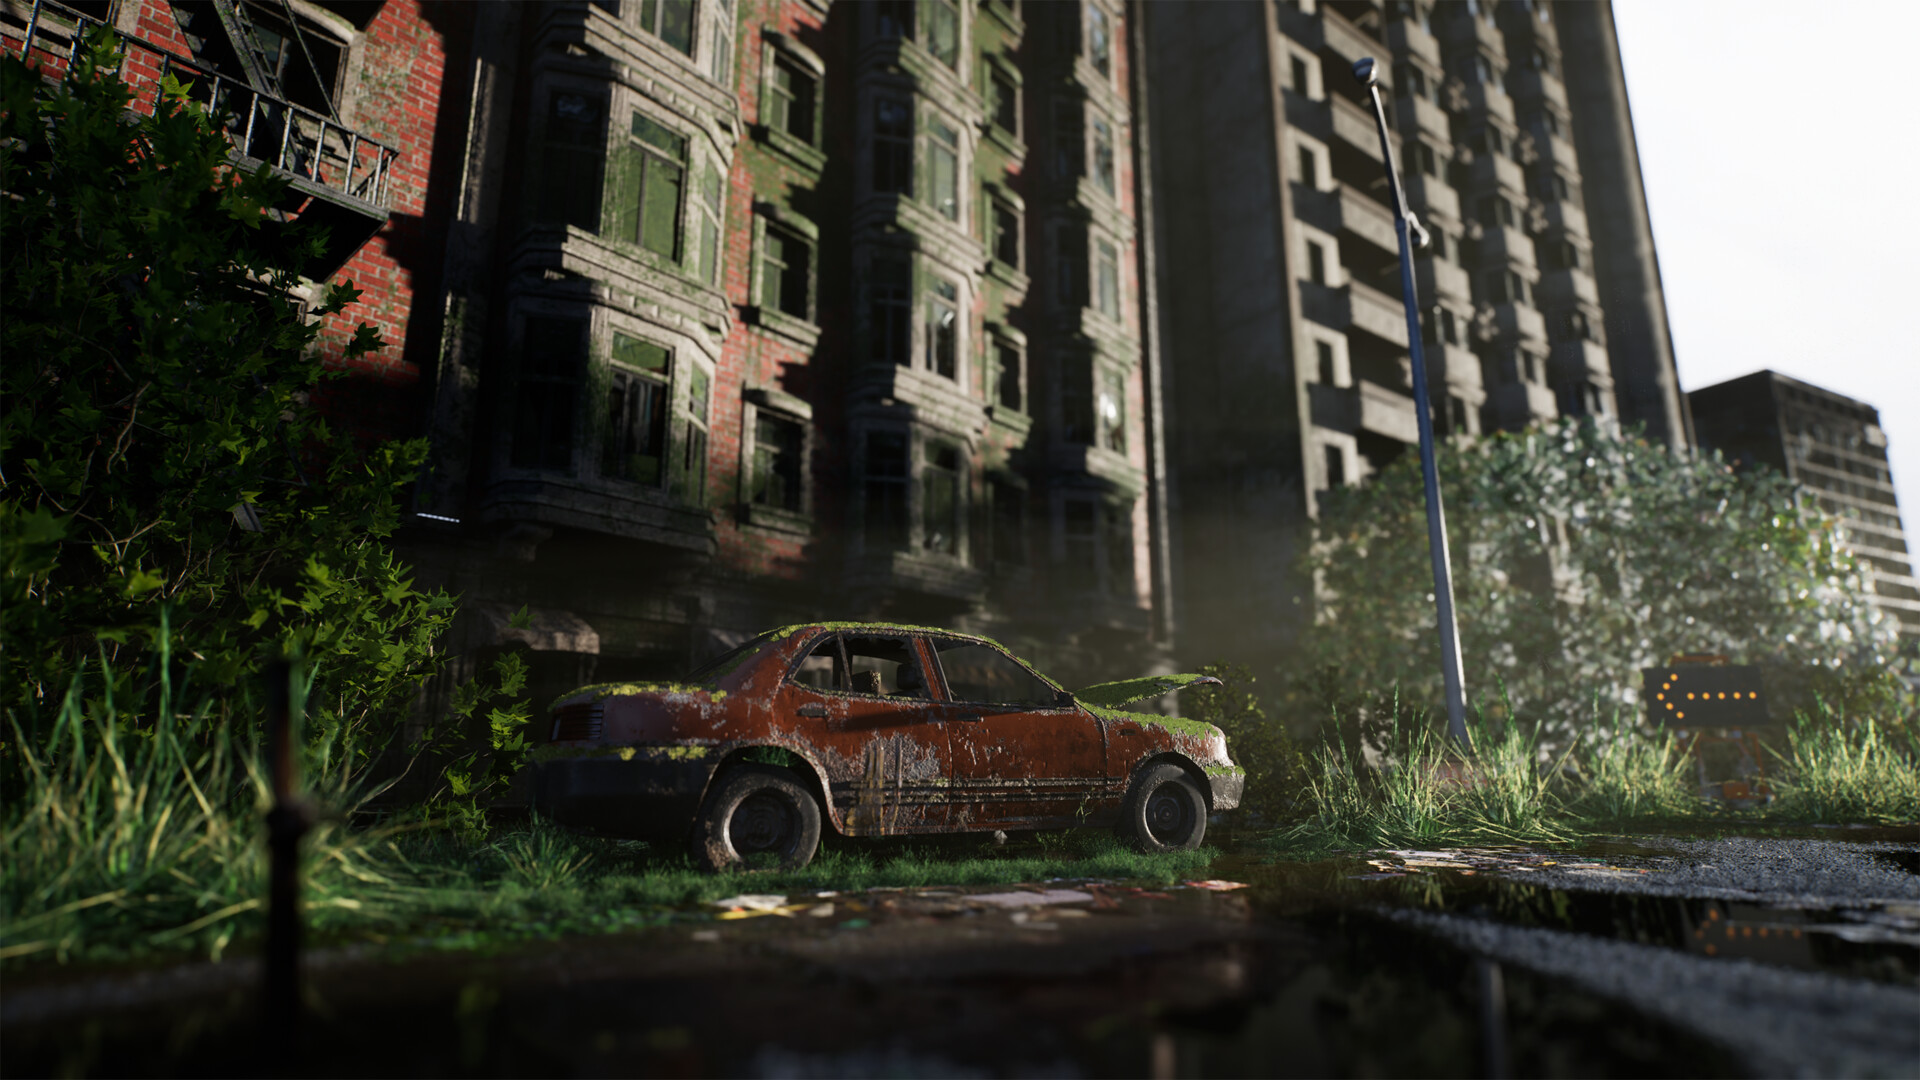 Artwork Digital Art Video Games The Last Of Us Fan Art Car Car Wreck Ruins Abandoned Apocalyptic Vid 1920x1080